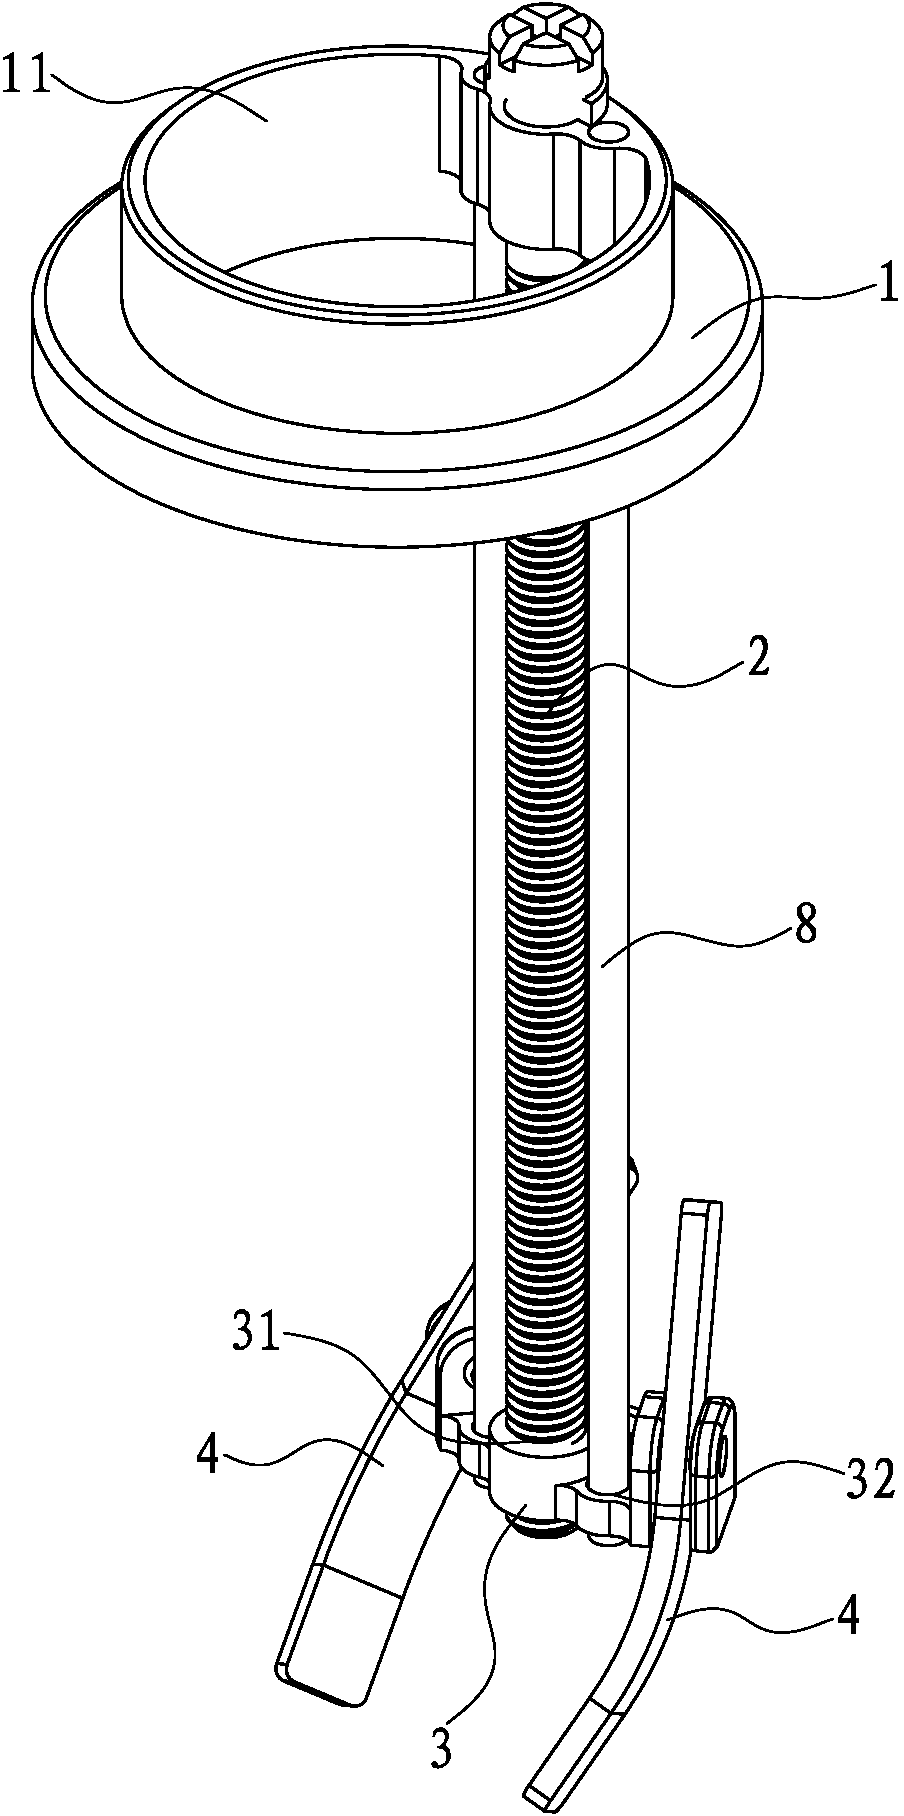 Fast installing mechanism on faucet platform